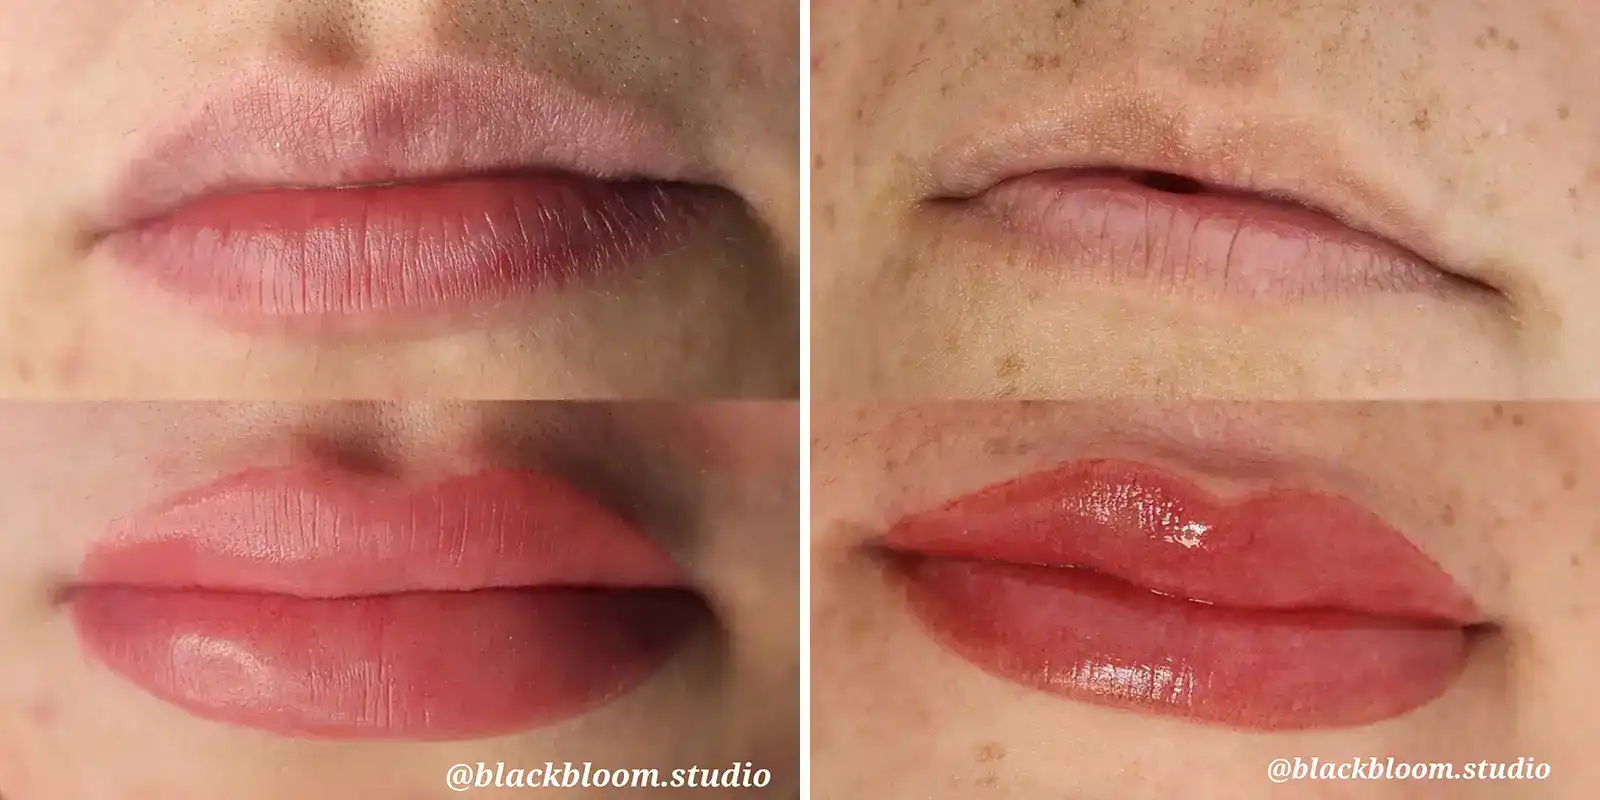 How Long Does Lip Blushing Last?